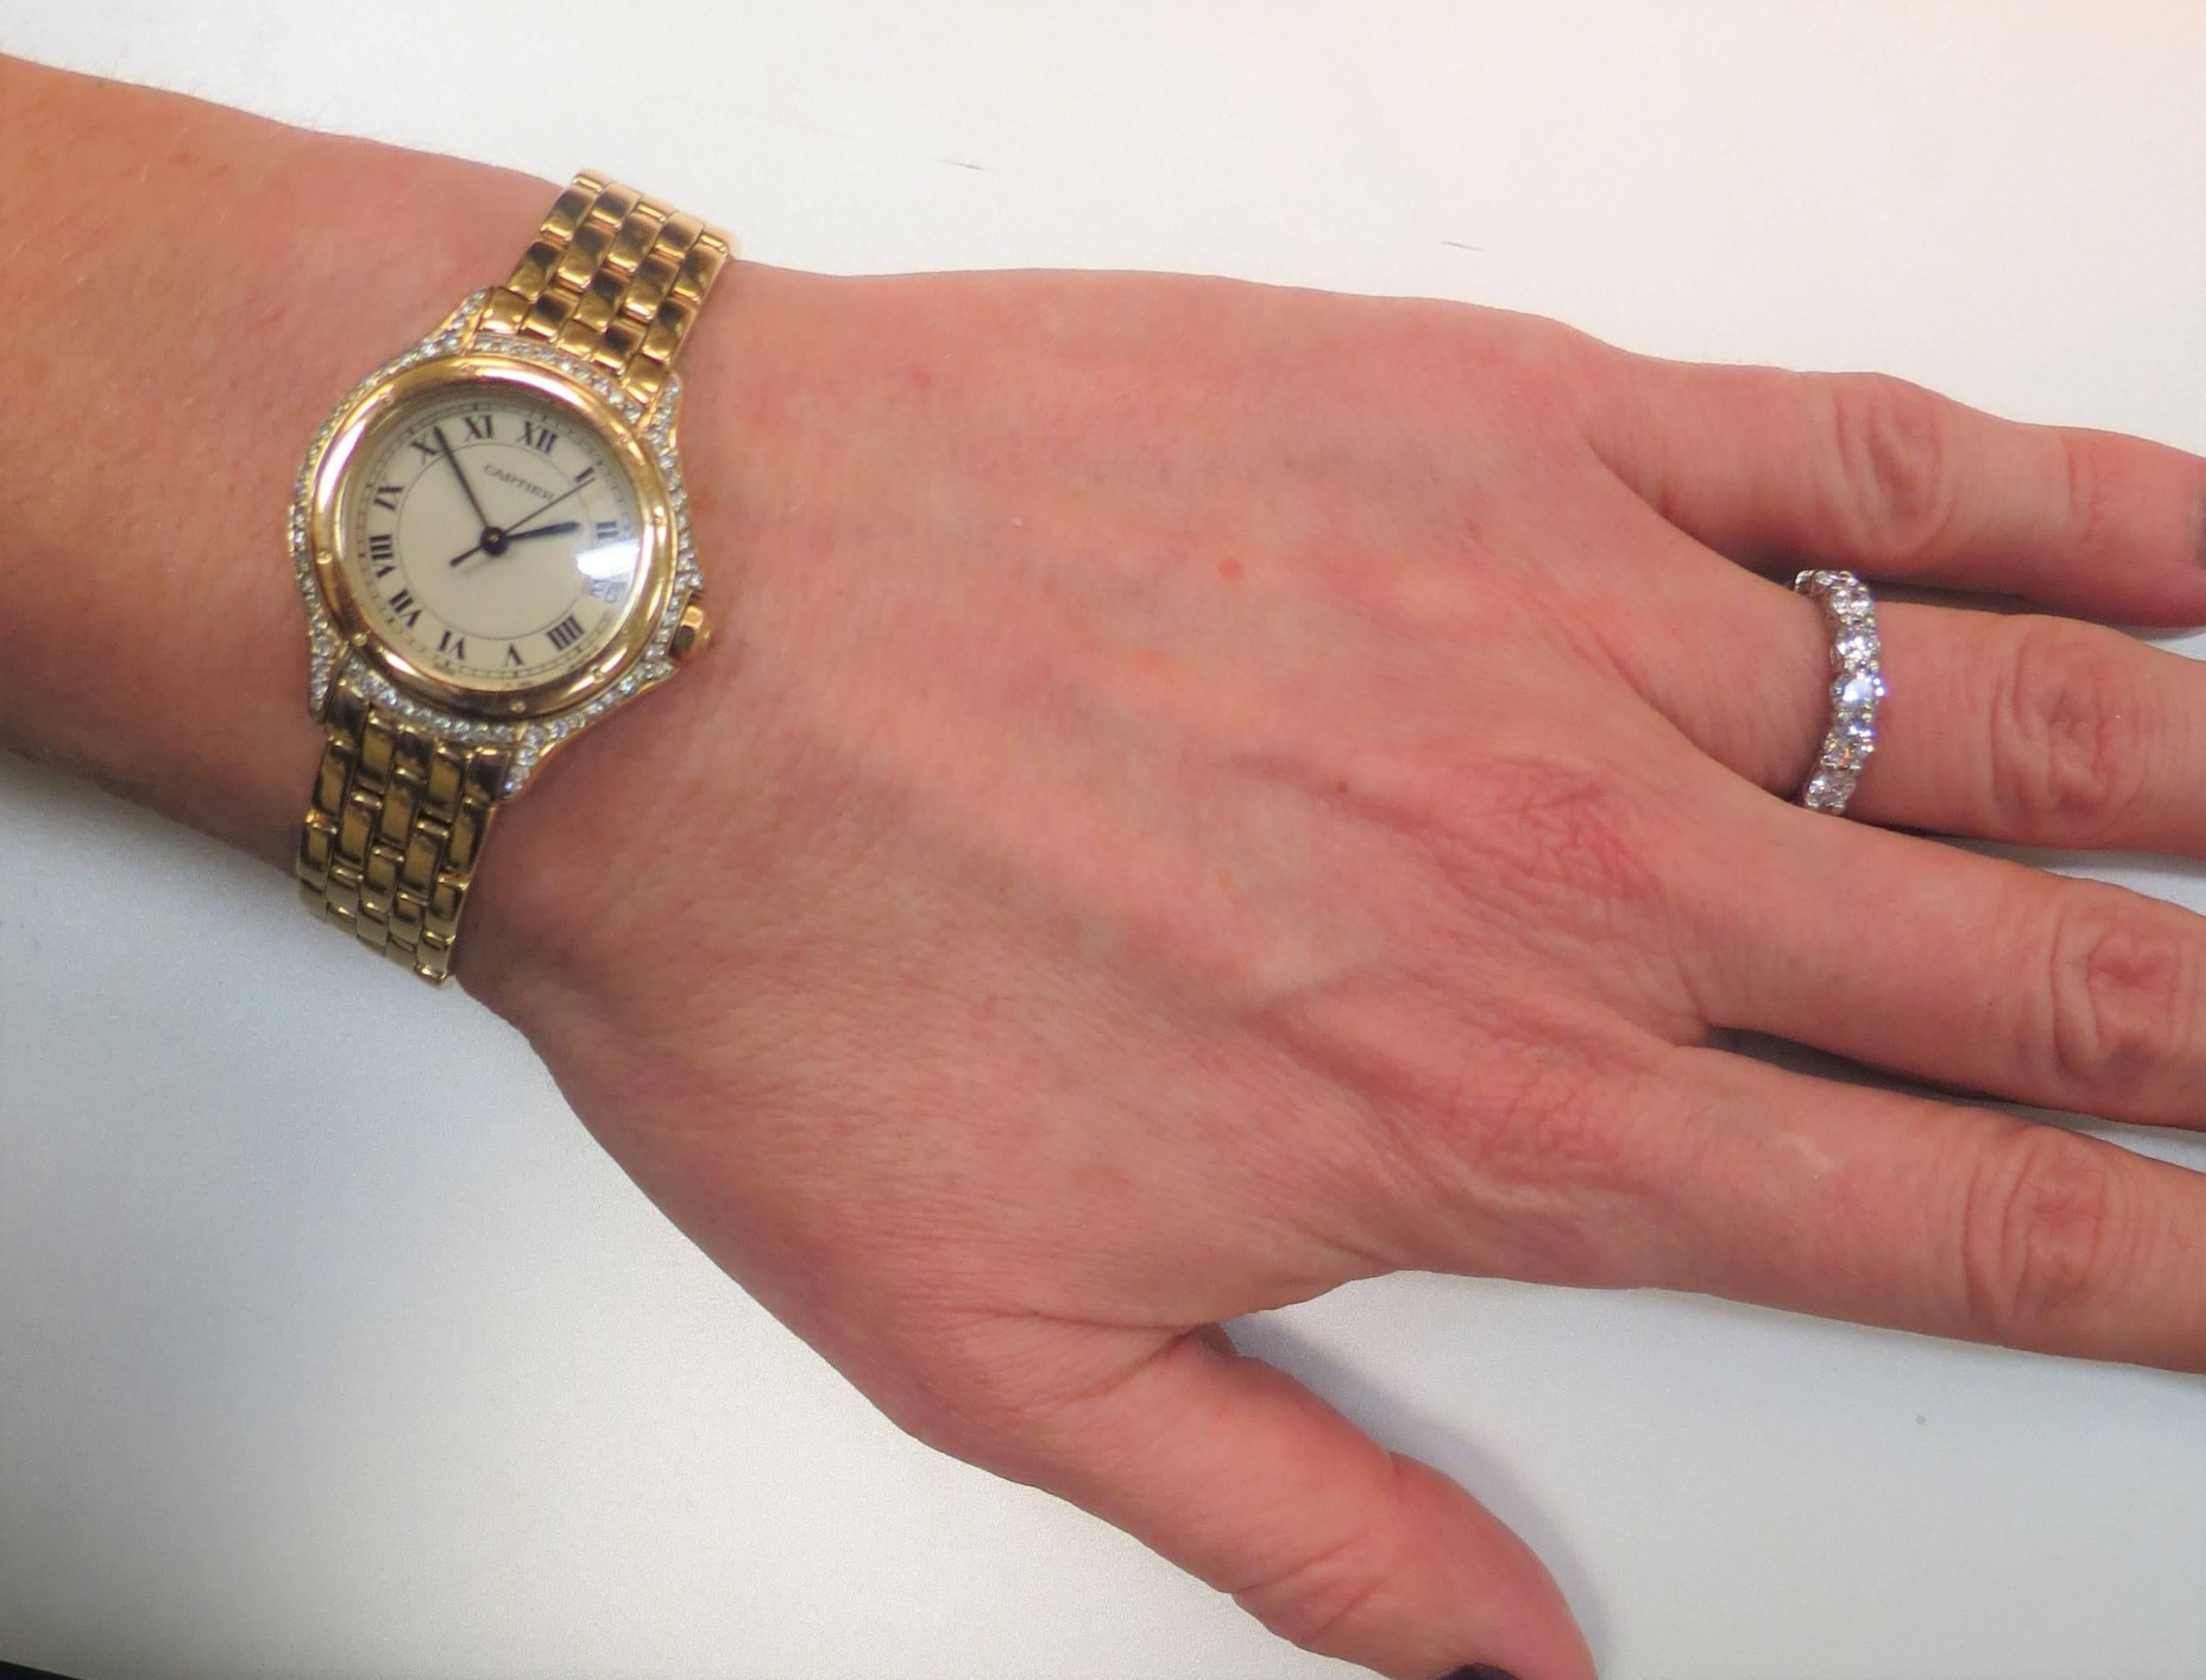 Ladies Pre-owned Cartier 18K yellow gold diamond Cougar bracelet watch, quartz movement, Roman Numerials, Sweep Second hand, Date window, Diamond Bezel with 72 full cut round diamonds, case size 26mm.
